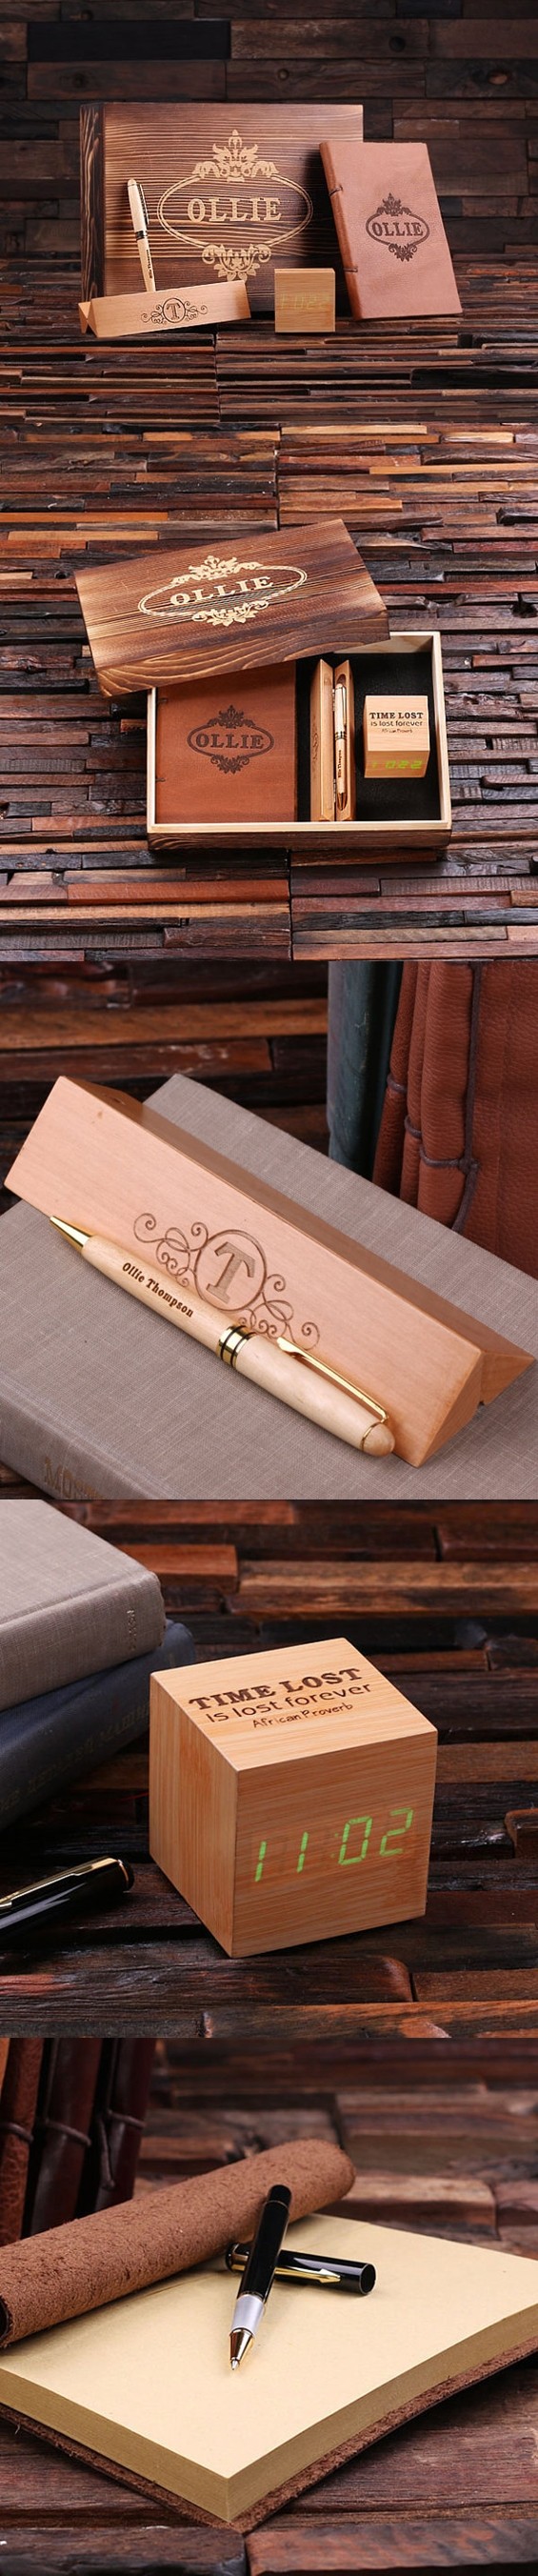 Personalized Gift-Set w/ Pen Set, Leather Journal & Digital Wood Clock